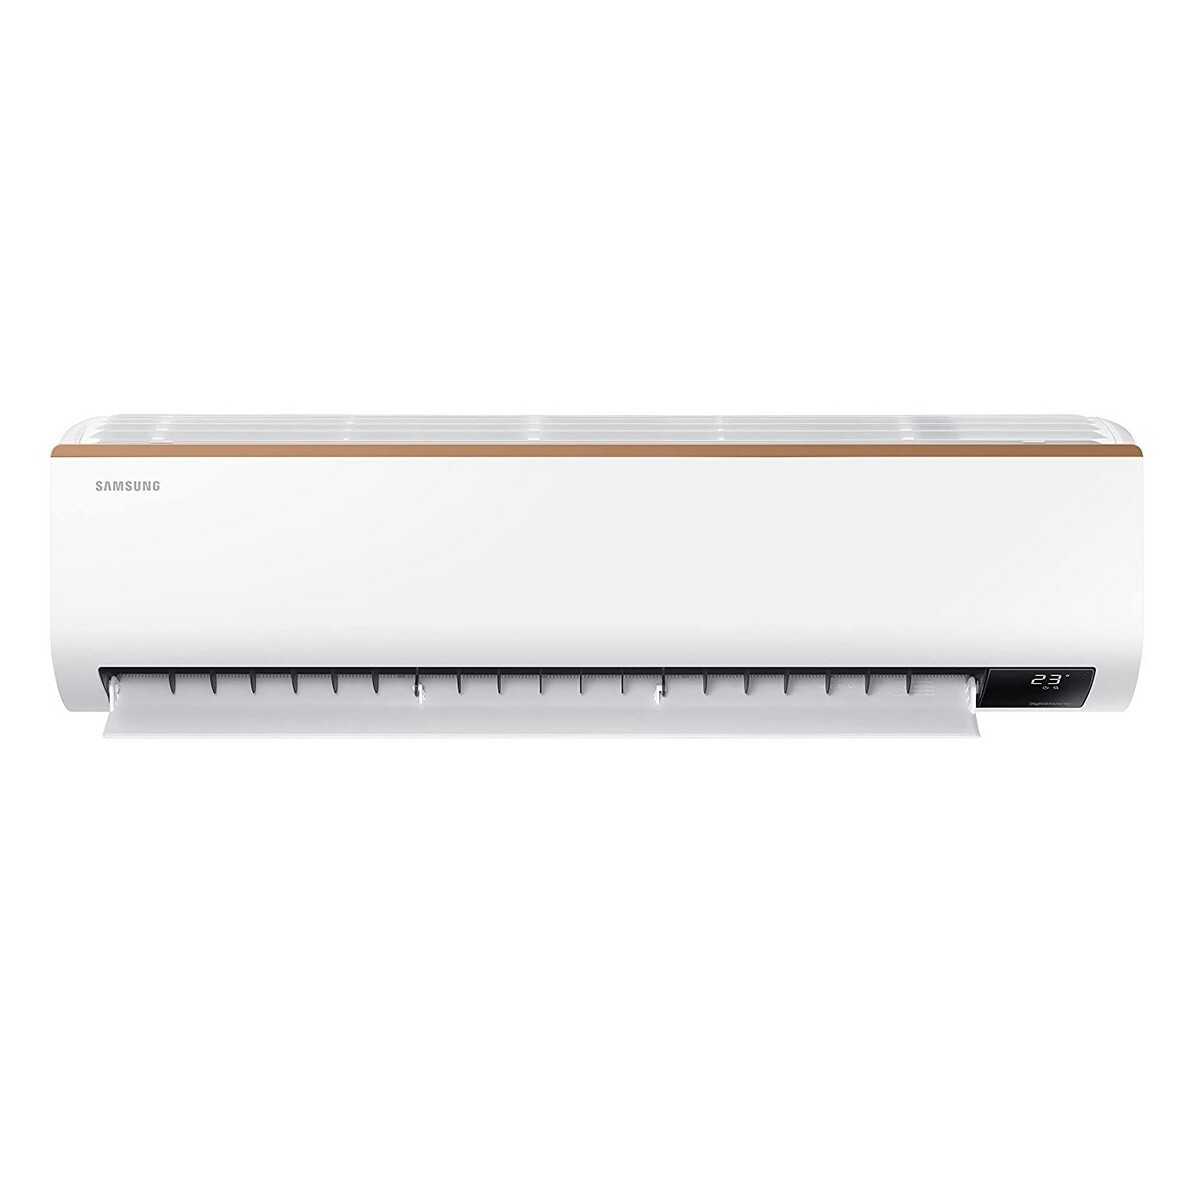 Samsung Inverter Air Conditioner AR18CY5ZAGD 1.5Ton 5 Star